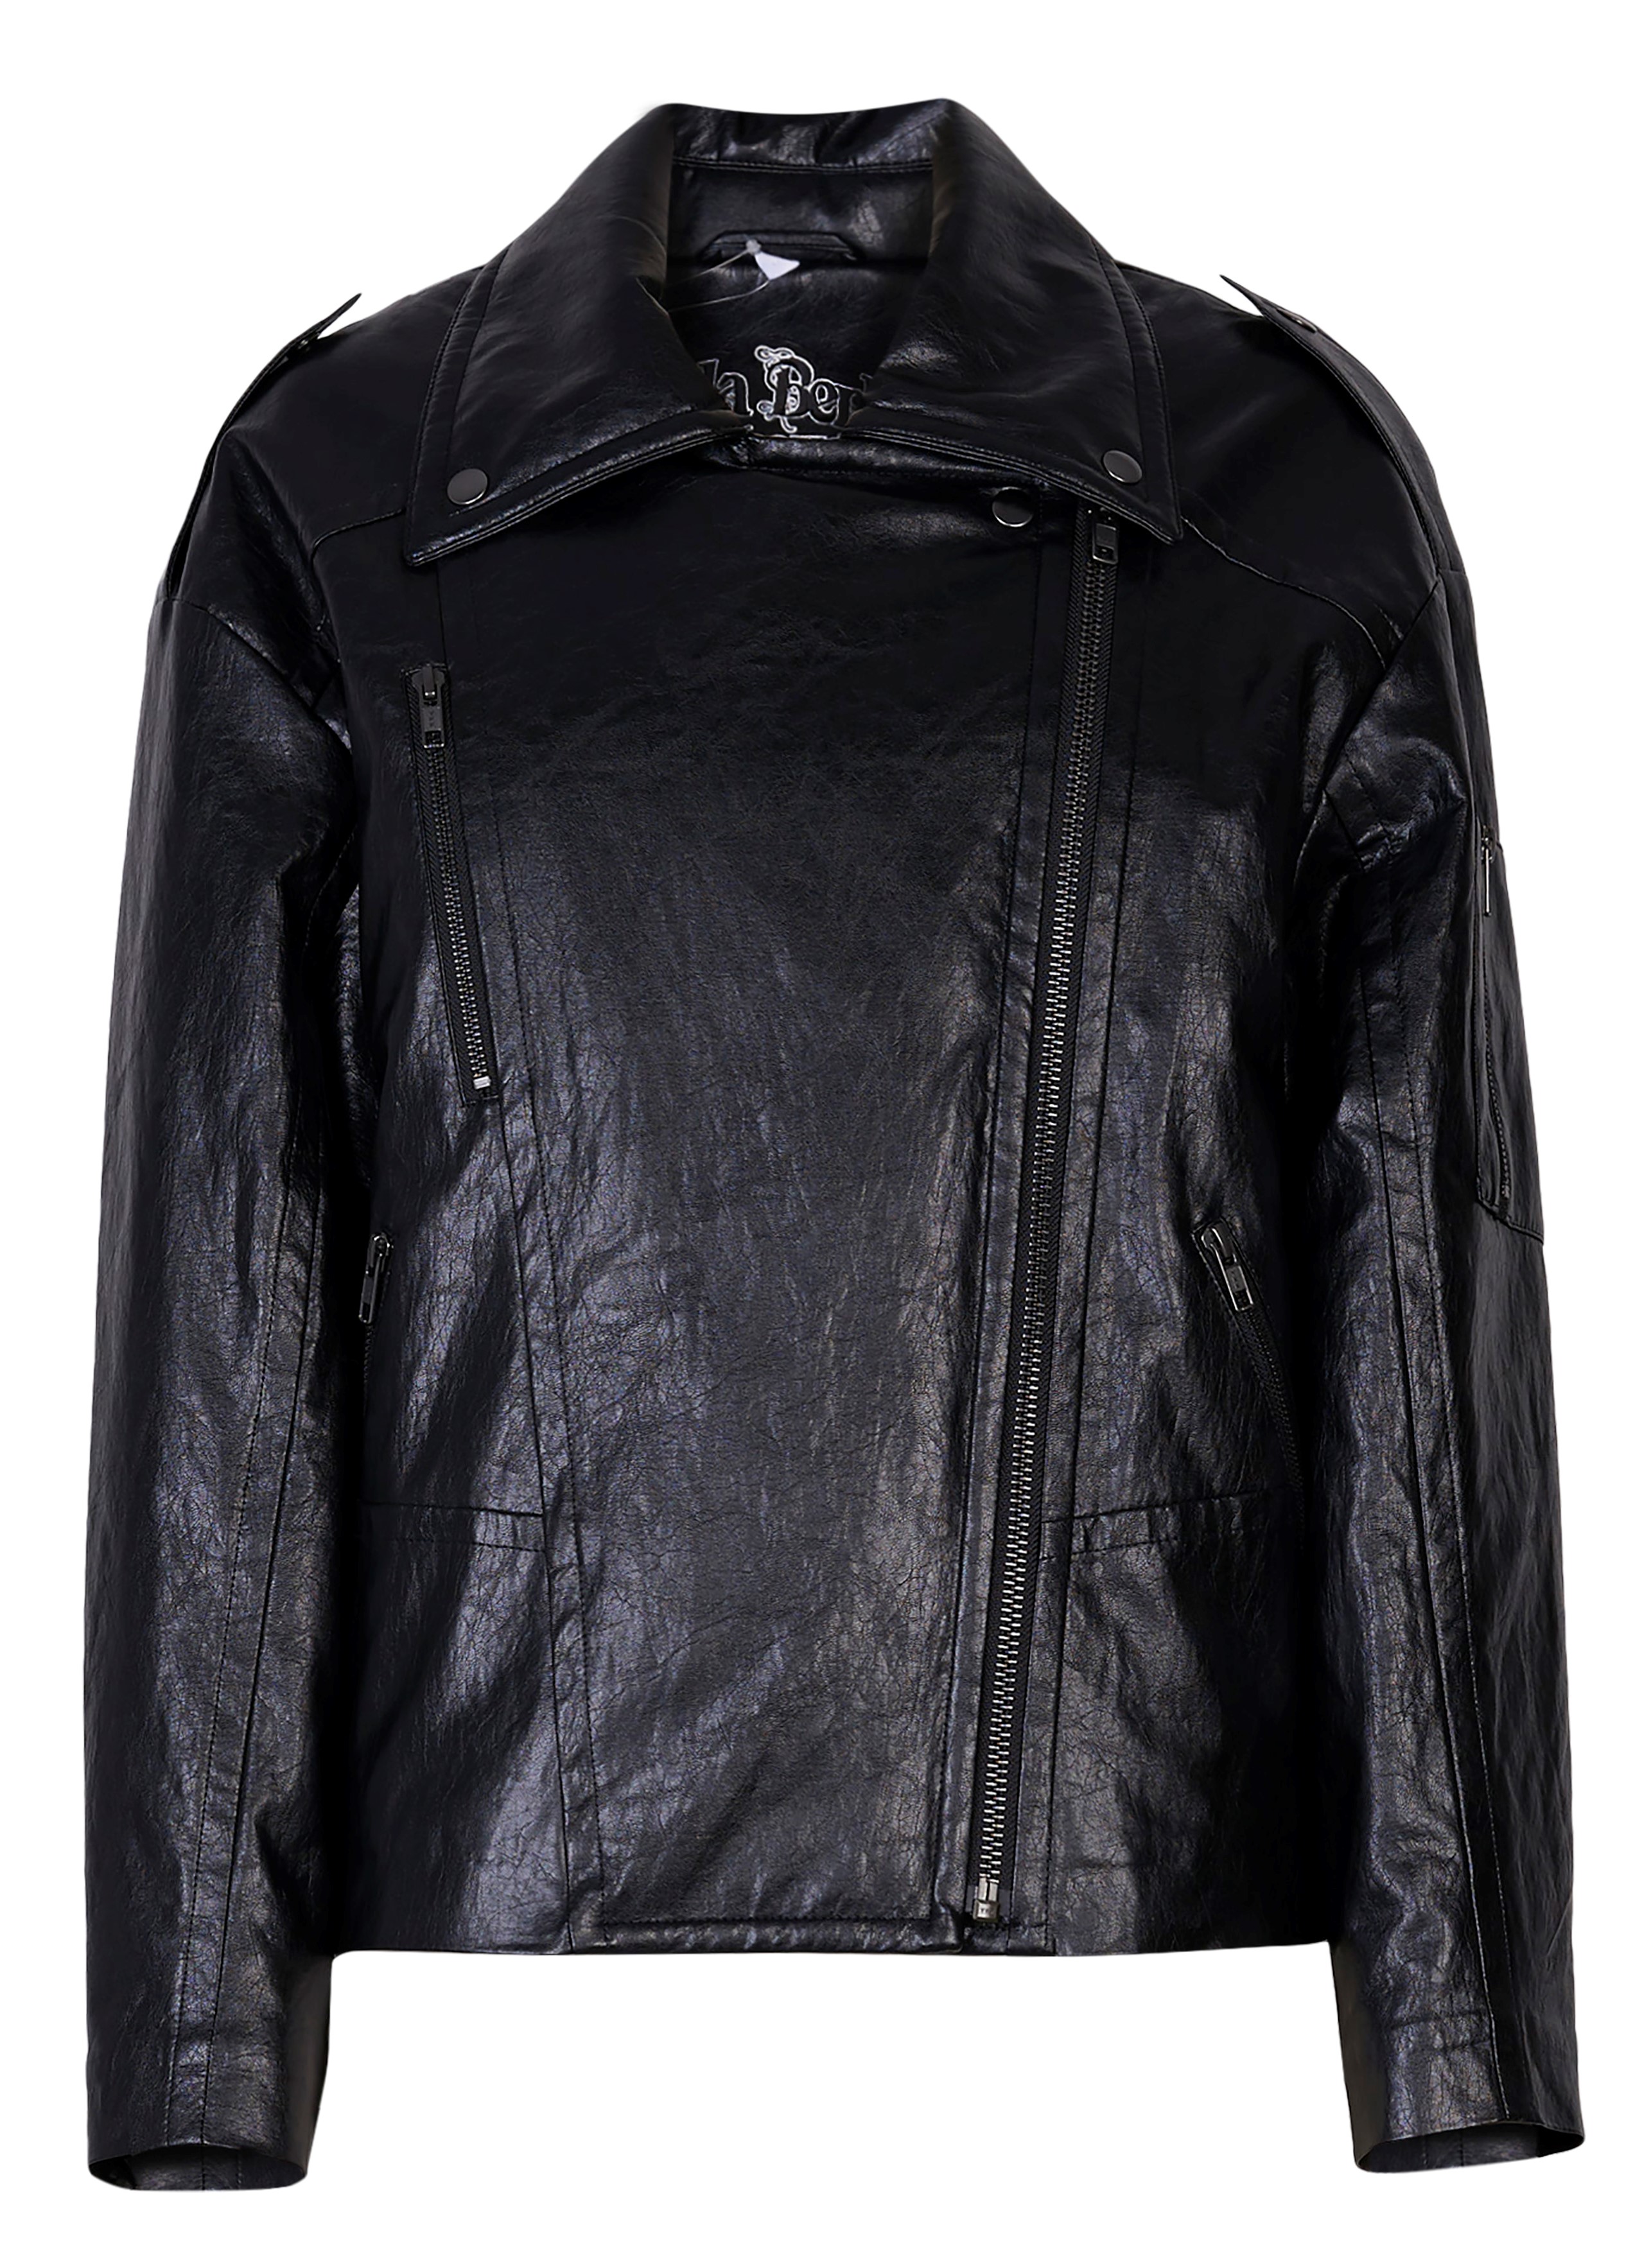 Lala Berlin Jax Vegan Leather Jacket in Black